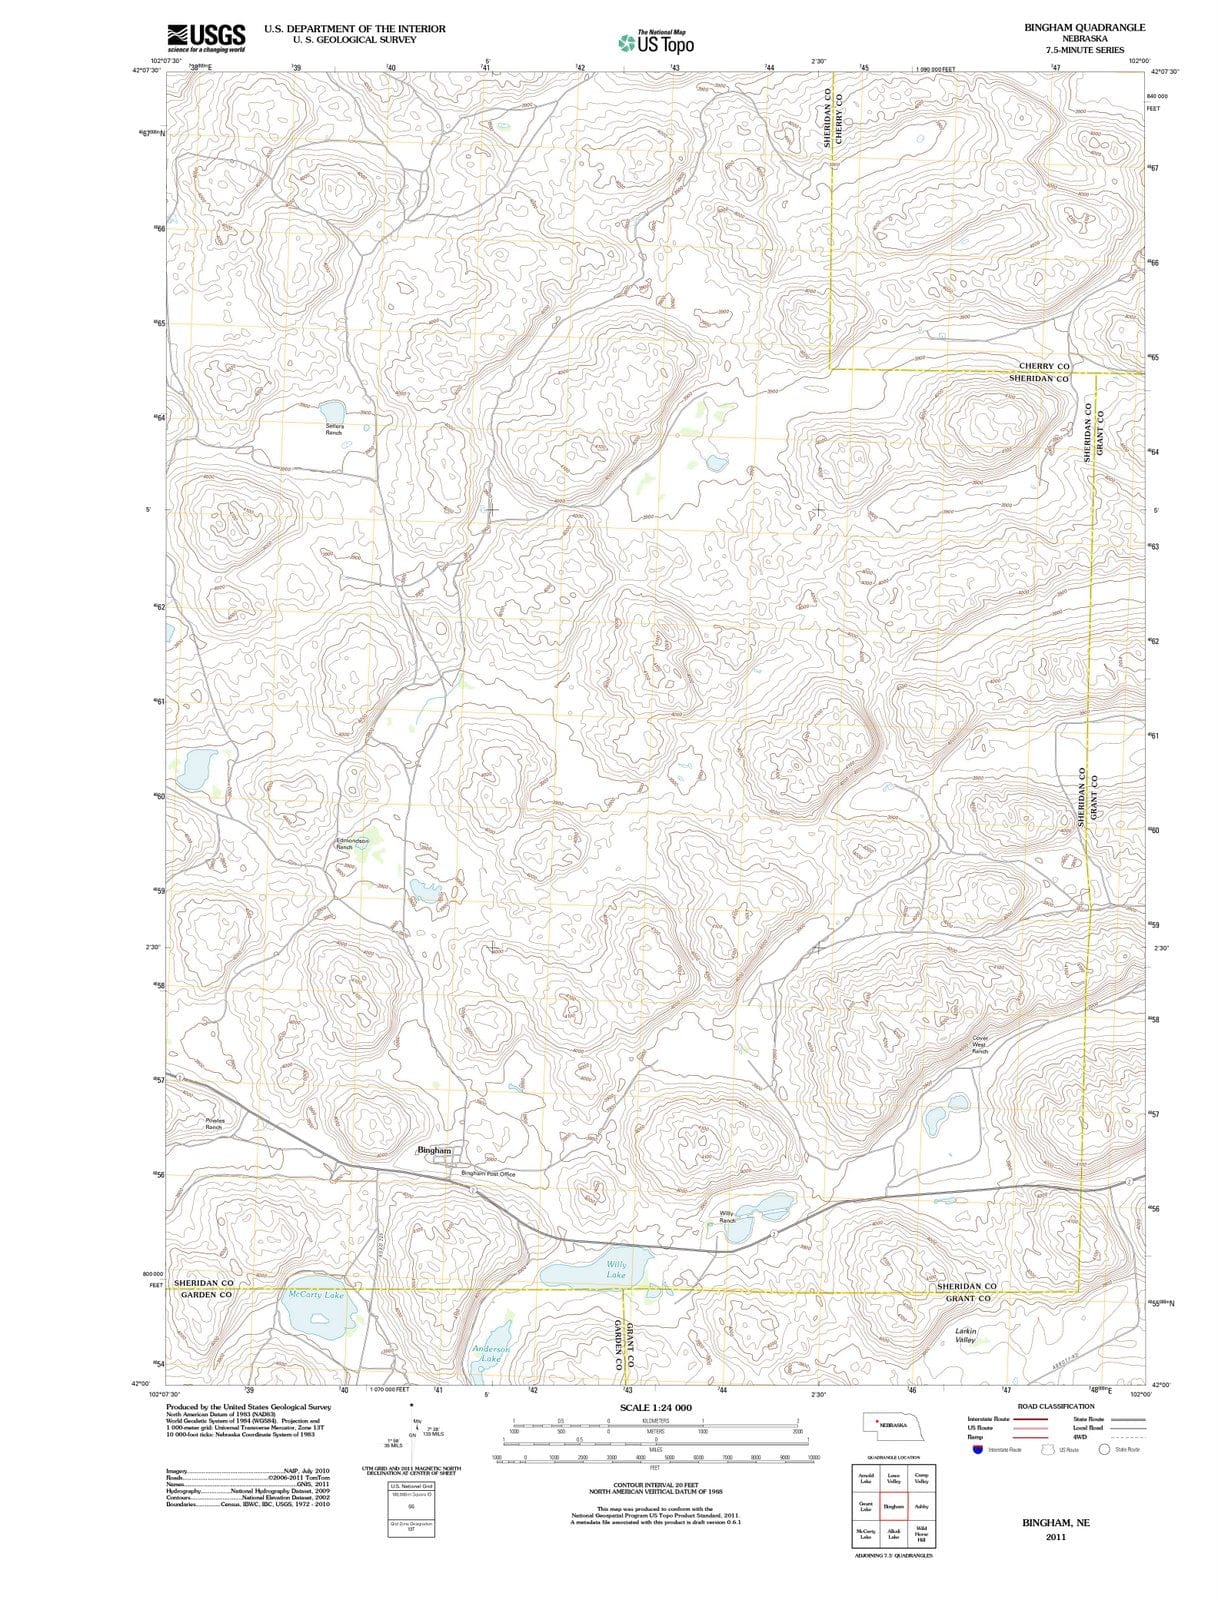 2011 Bingham, NE - Nebraska - USGS Topographic Map